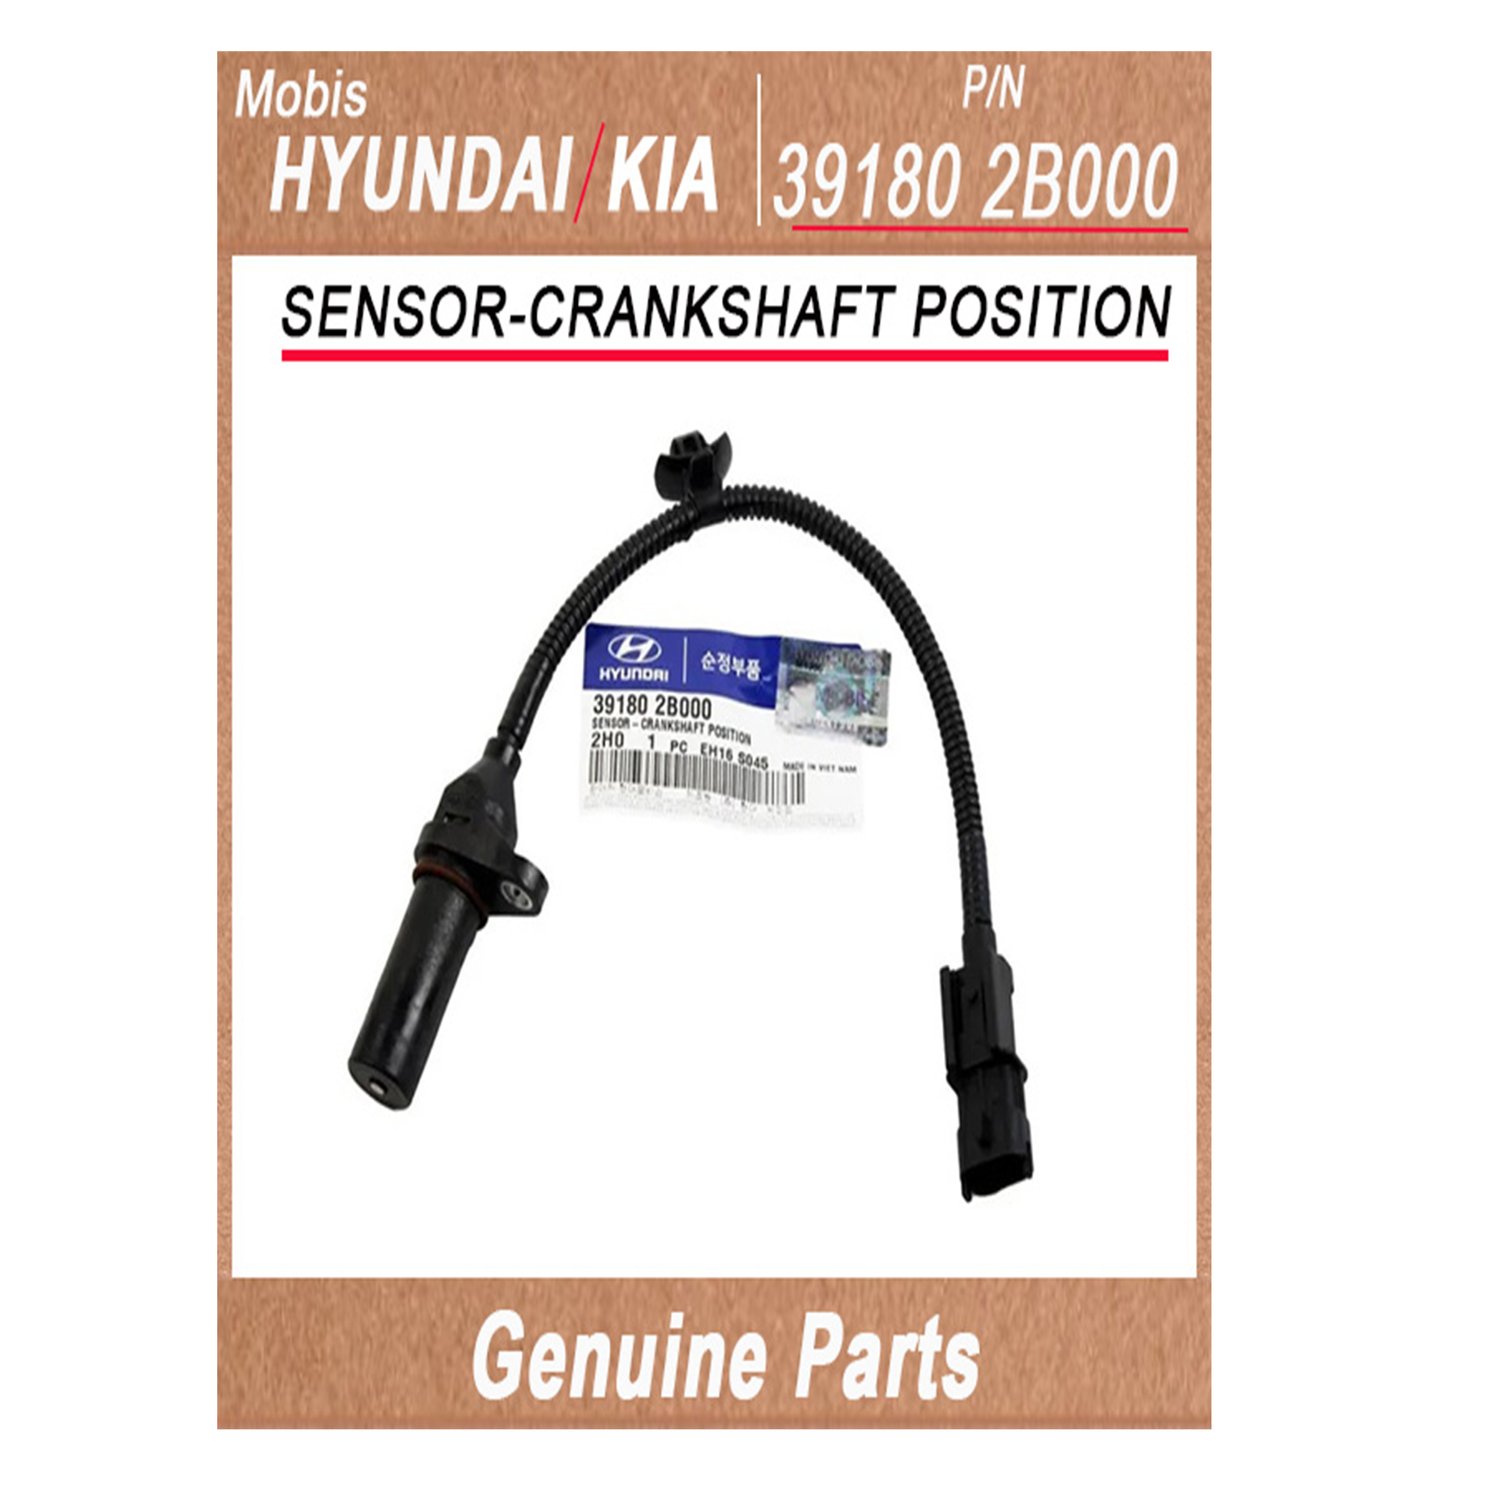 391802B000 _ SENSOR_CRANKSHAFT POSITION _ Genuine Korean Automotive Spare Parts _ Hyundai Kia _Mobis